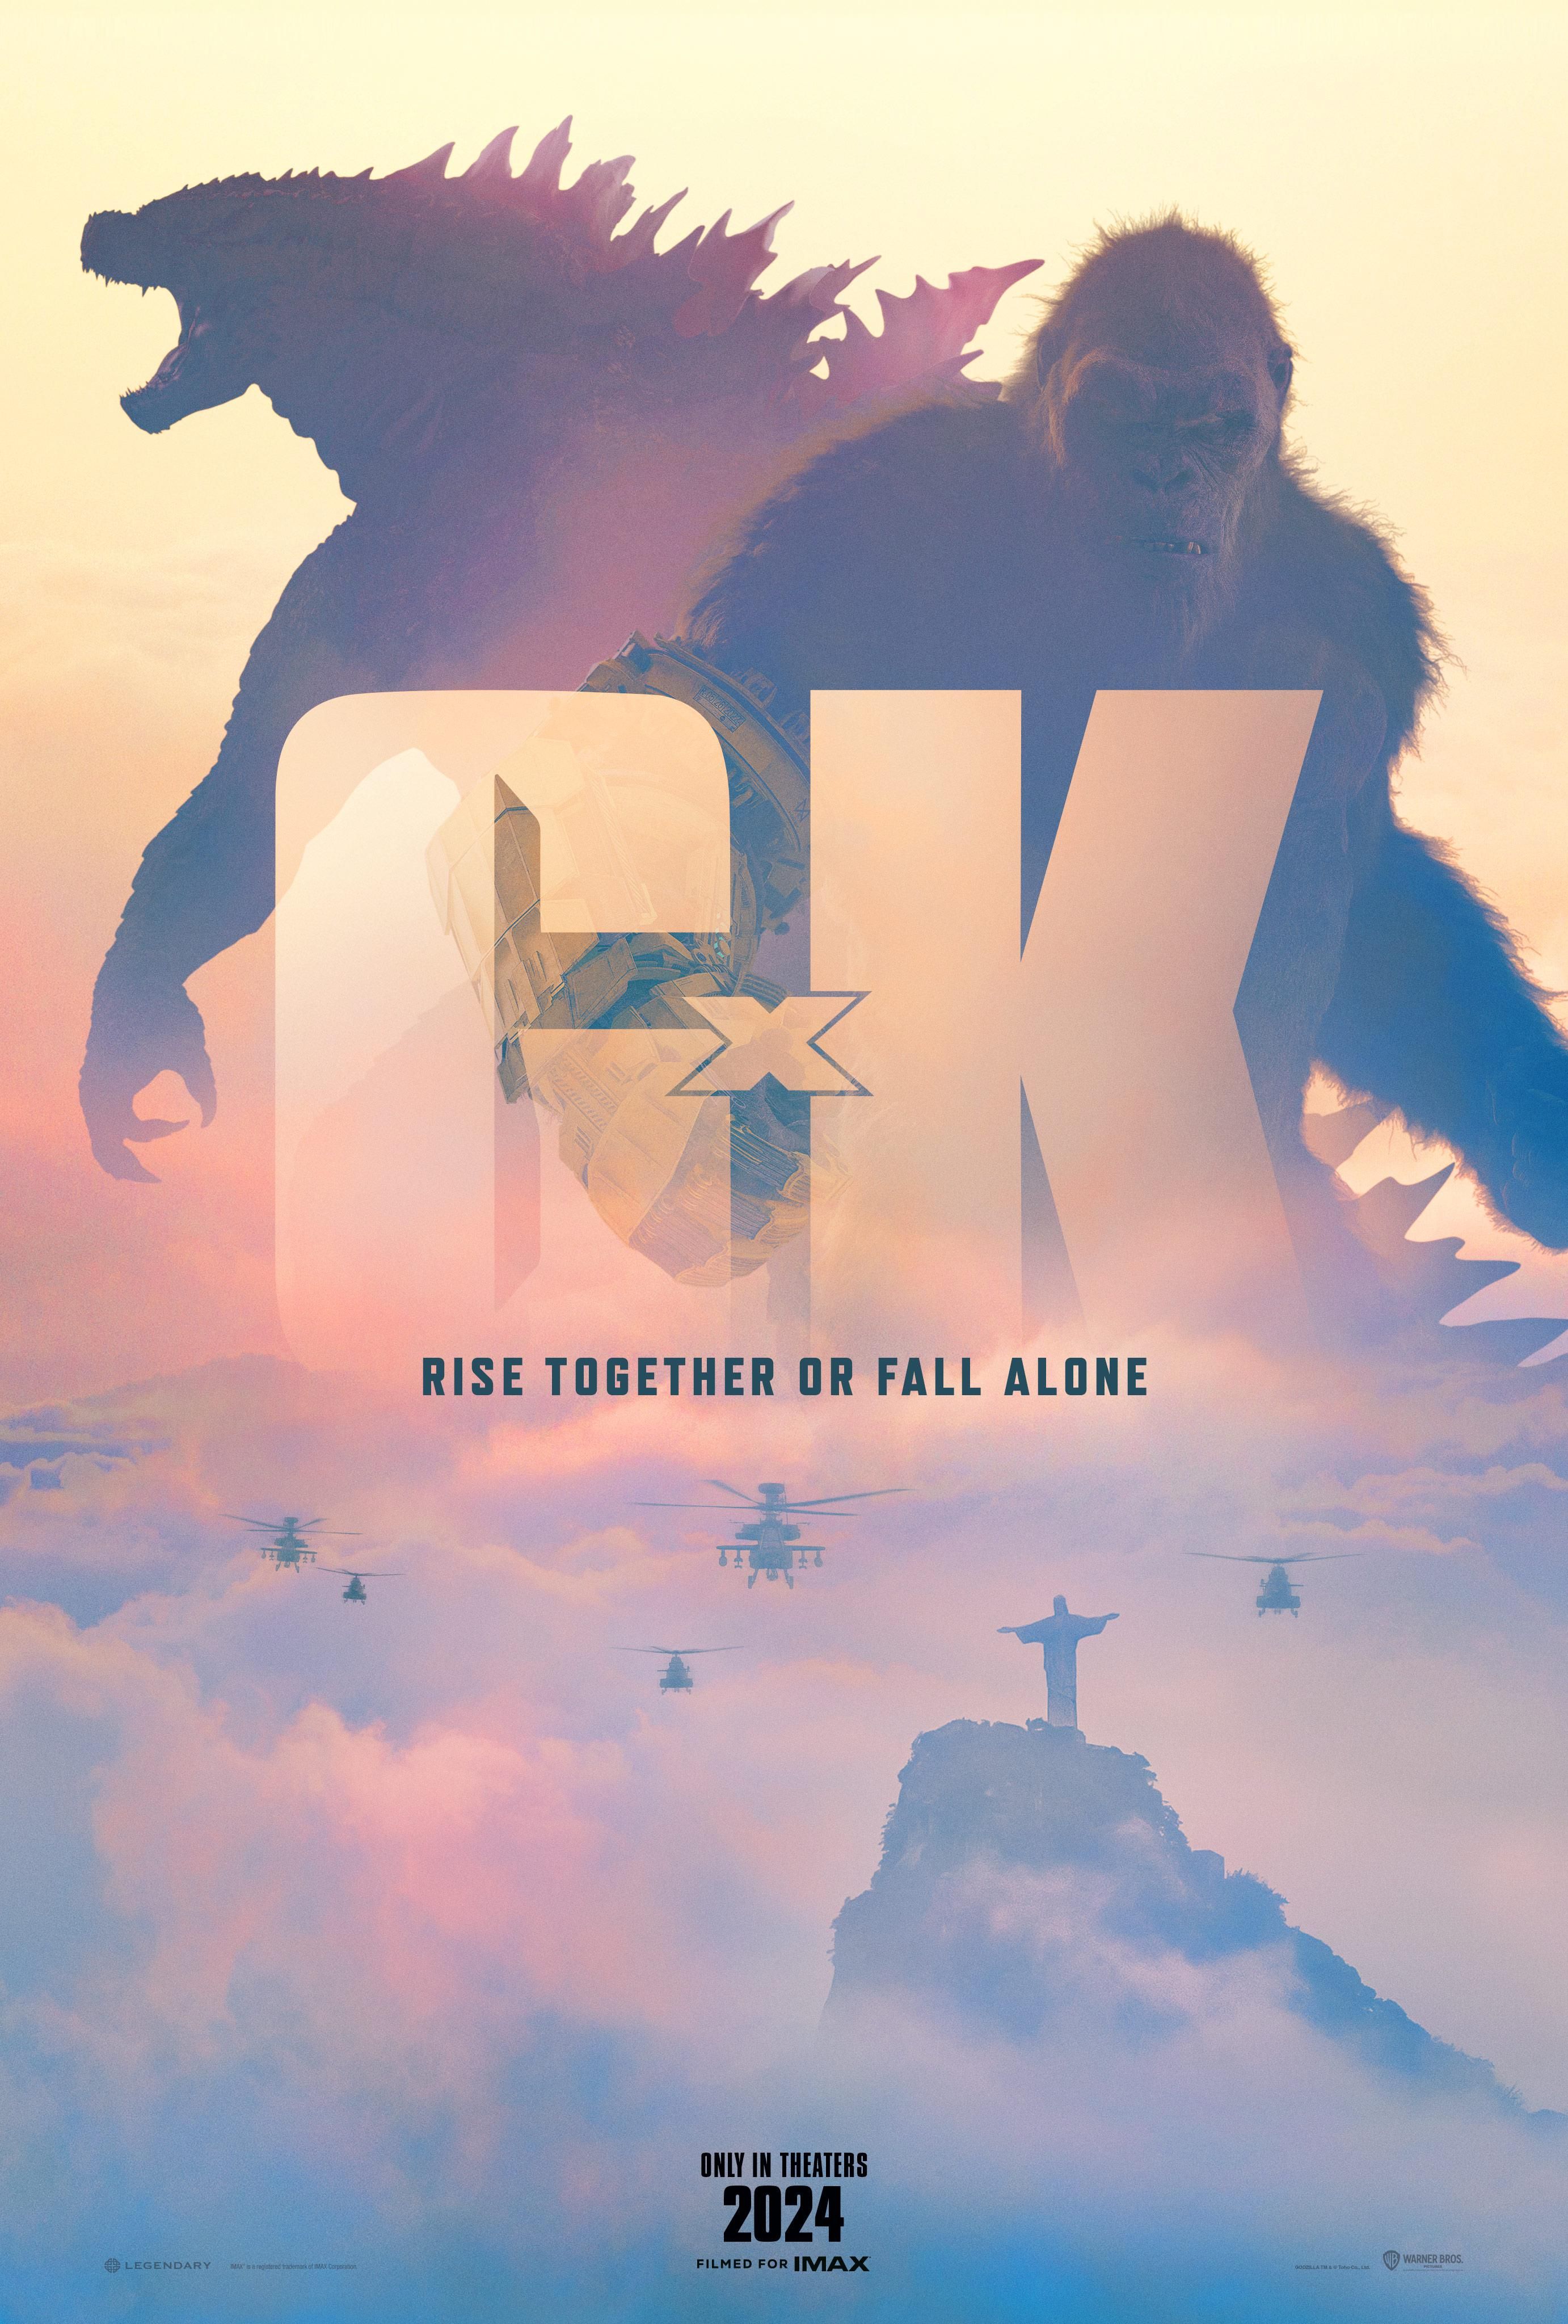 Godzilla x Kong Already Breaks Box Office Record, Eyes Huge Opening Weekend